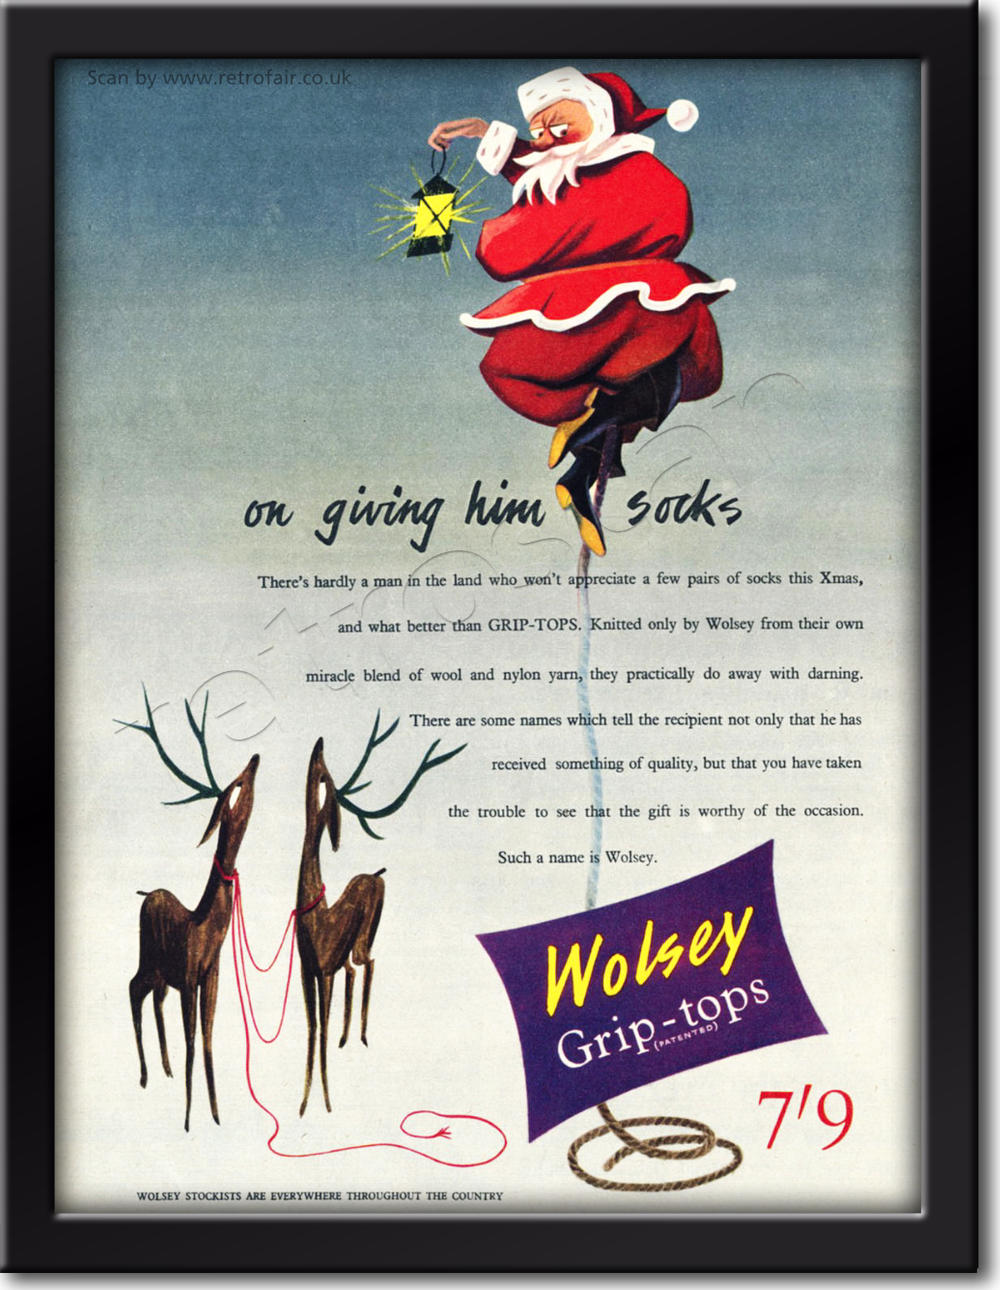 1954 vintage Wolsey Grip-Tops Christmas advert